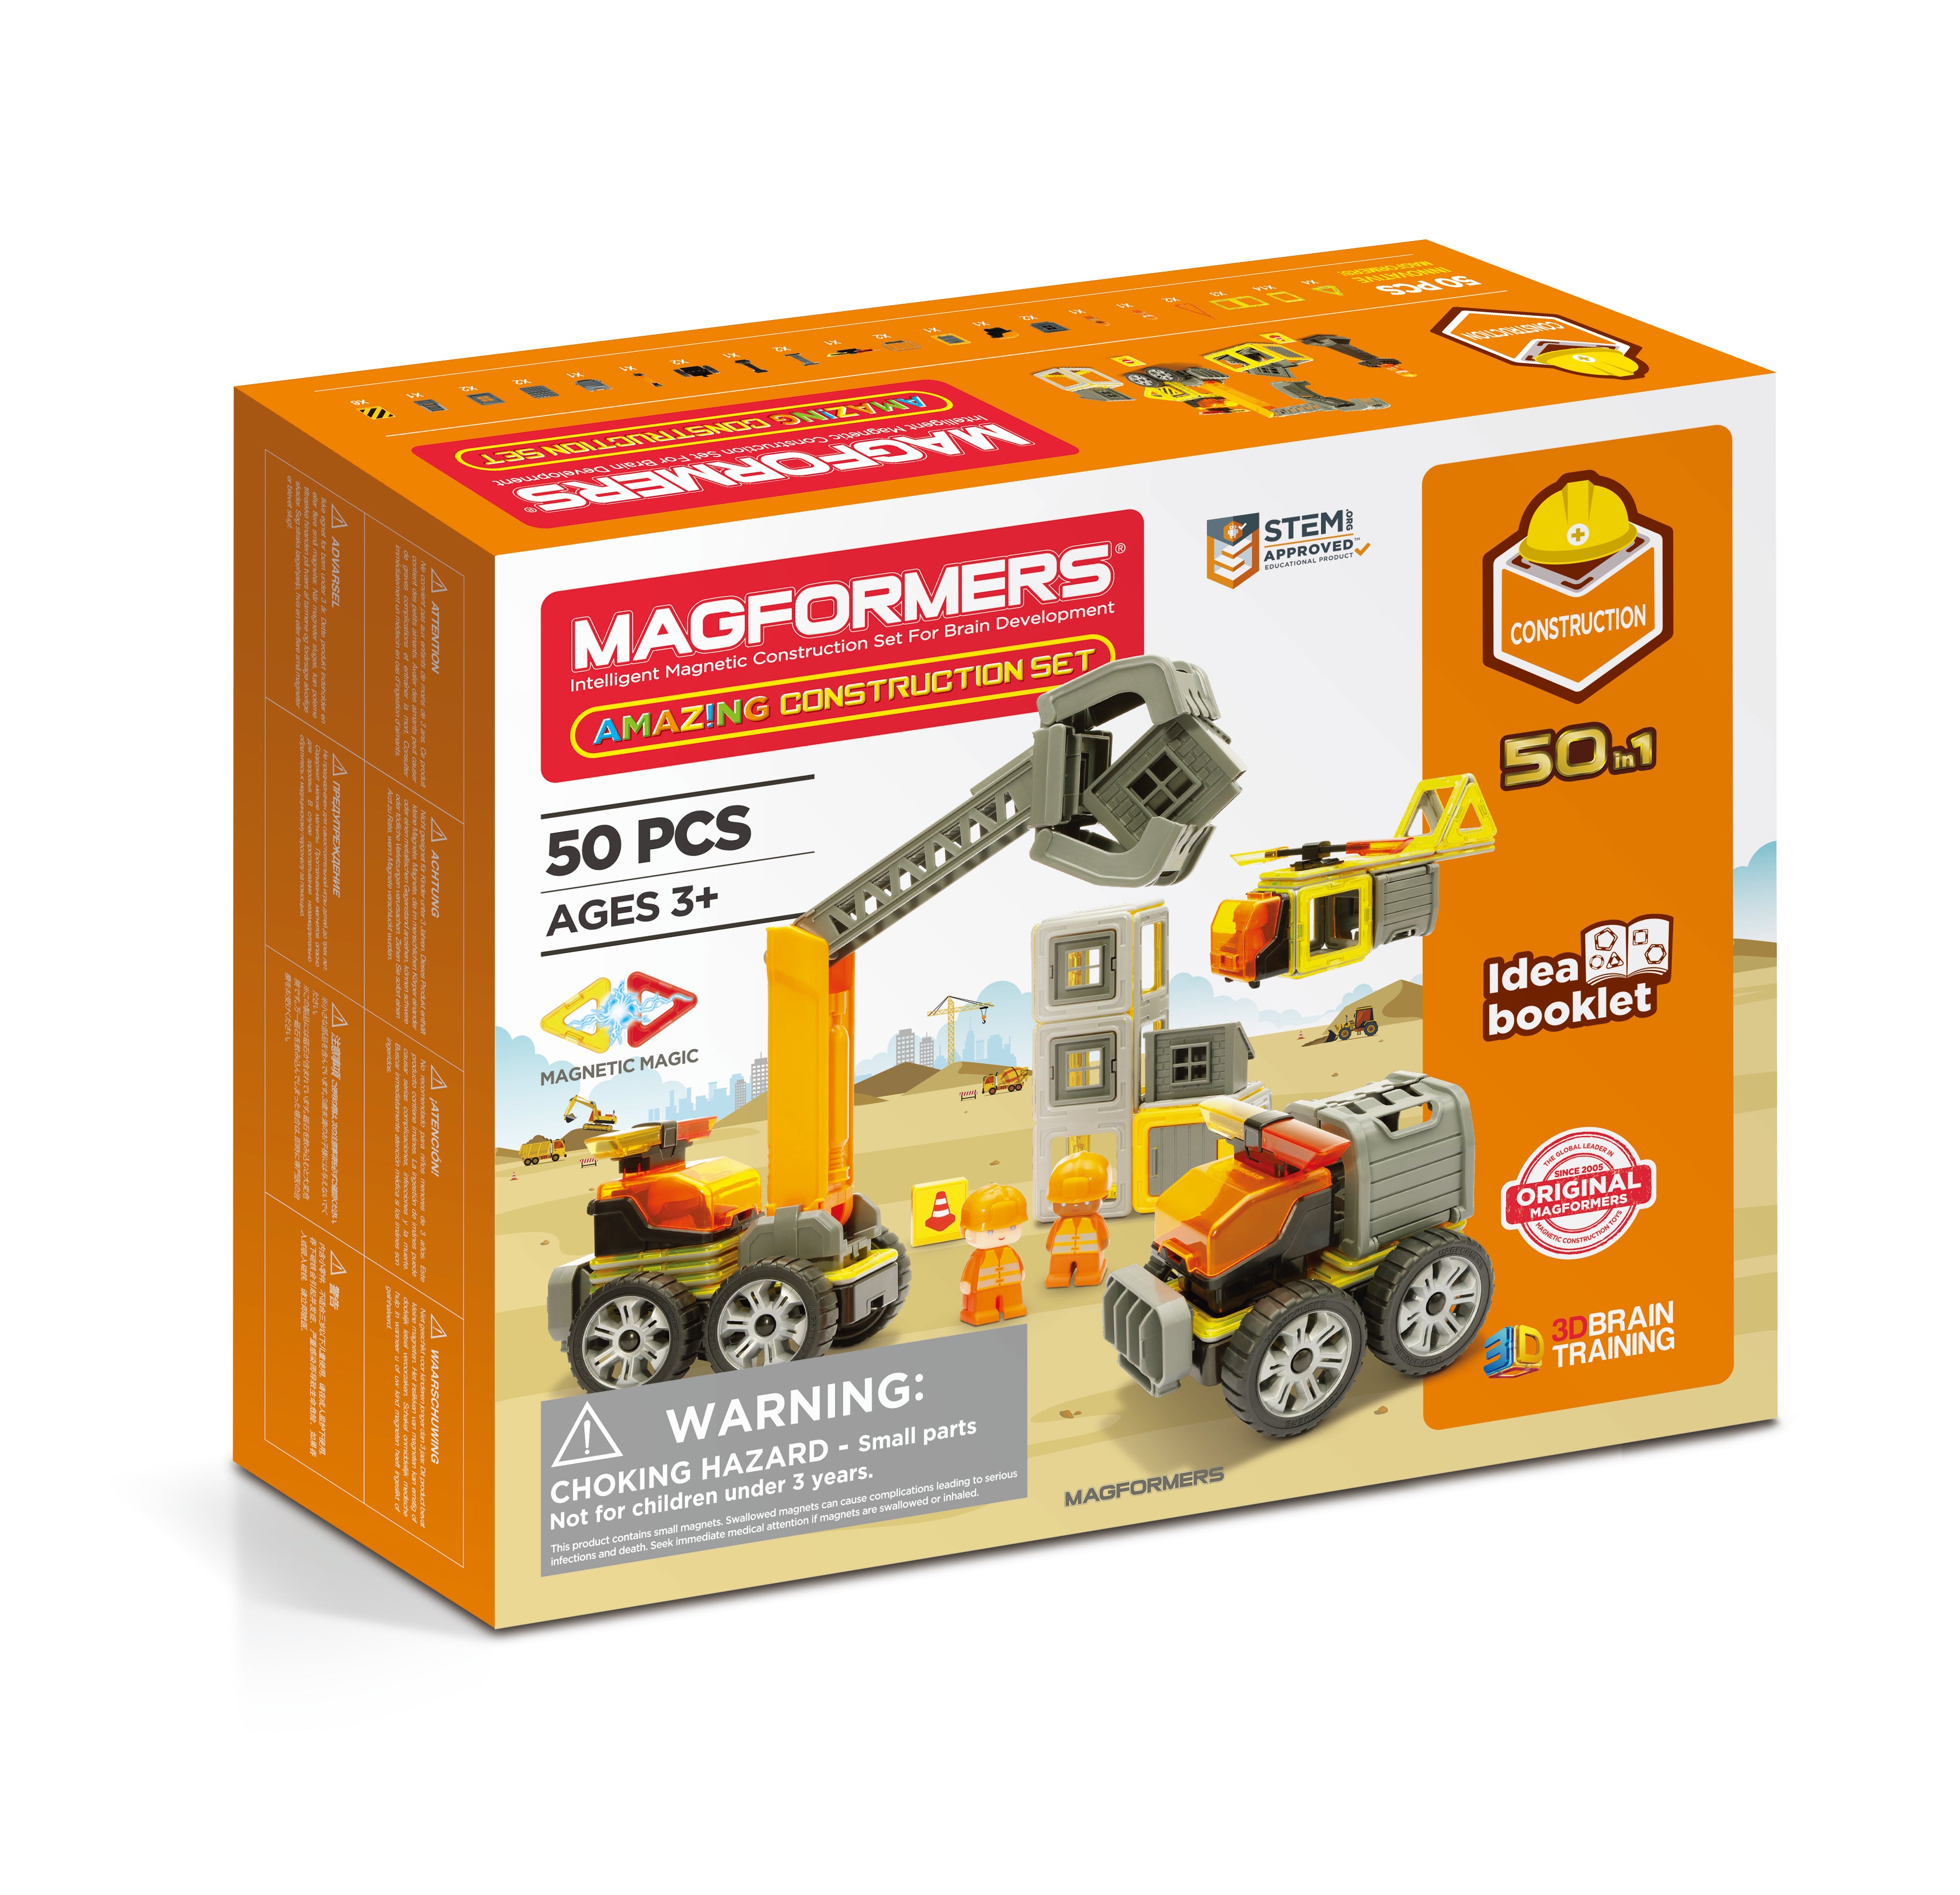 Magformers Construction Set, 50-piece